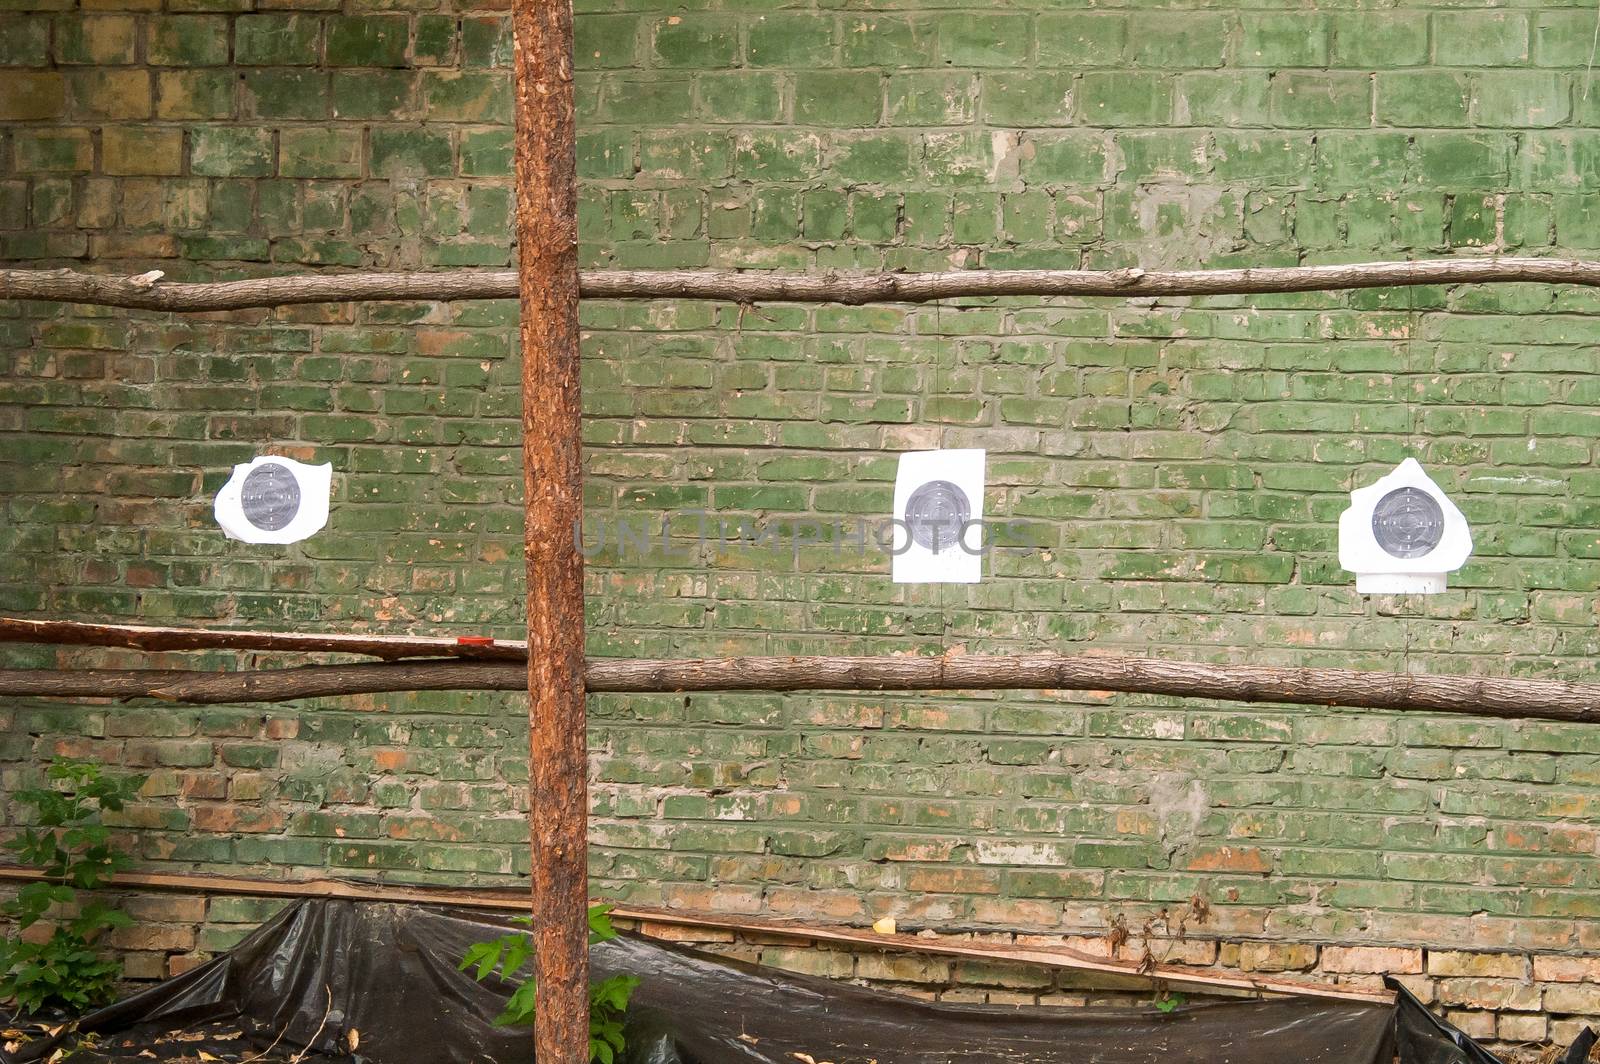 target on the brick wall street shooting range